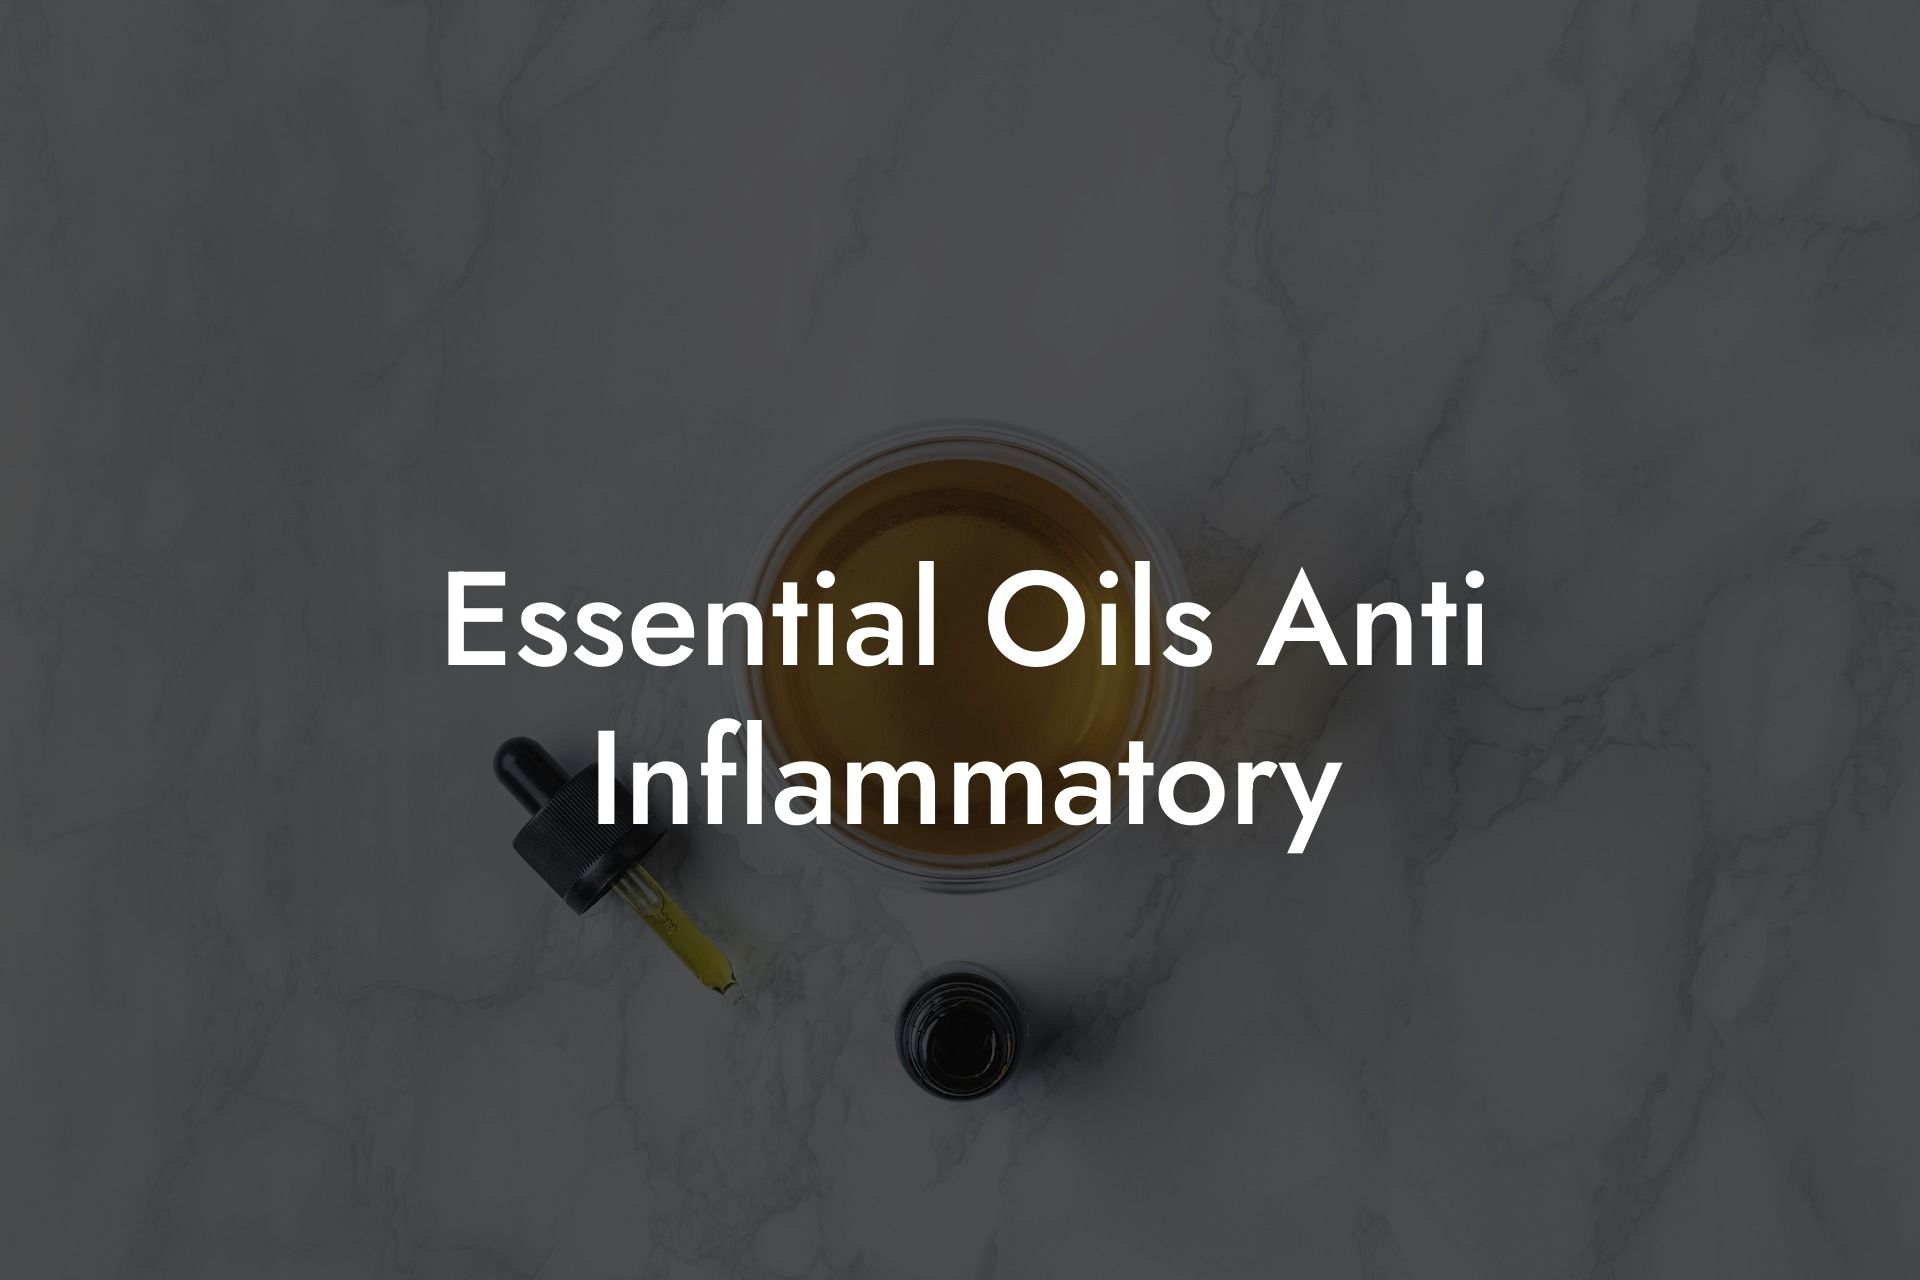 Essential Oils Anti Inflammatory